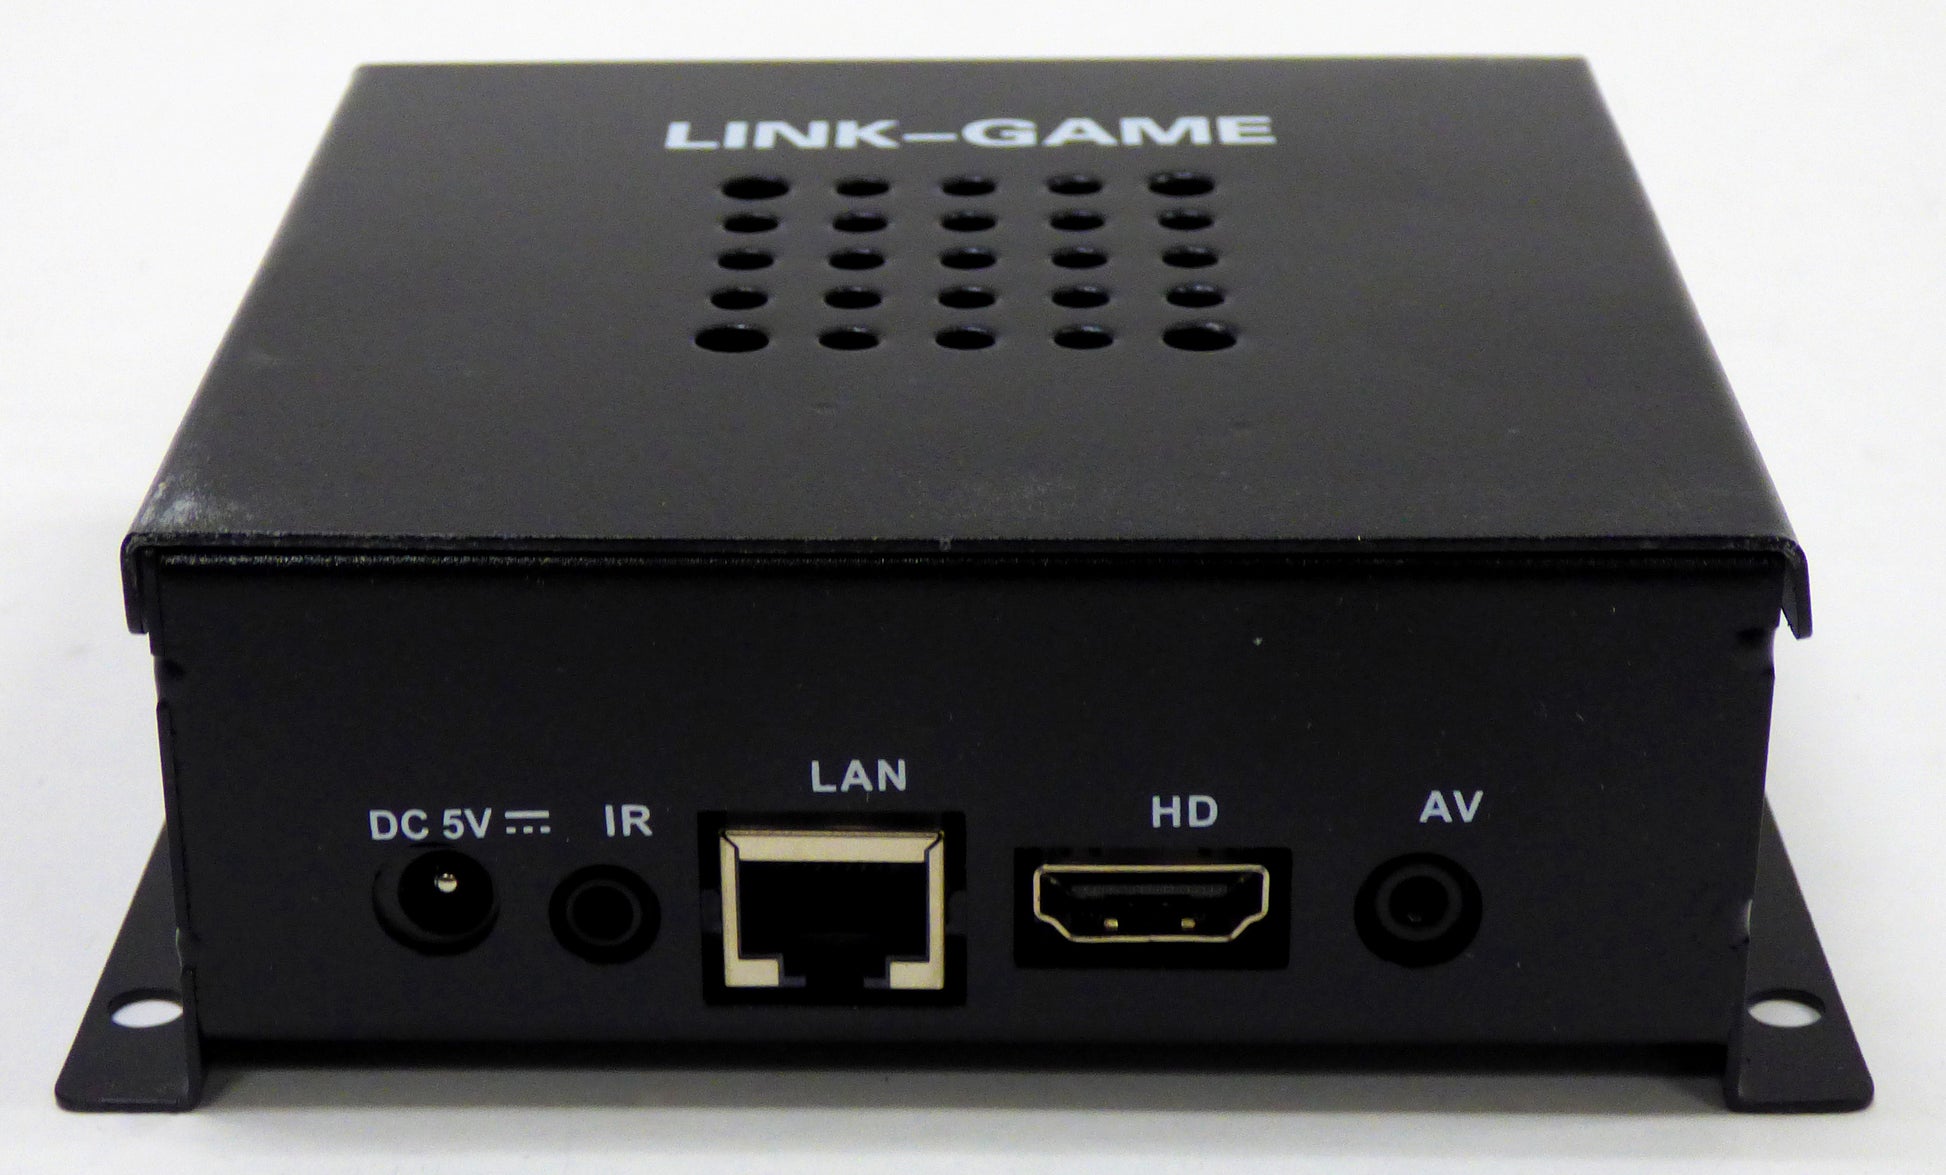 link-game video game box de-b1-1.0 bottom ports